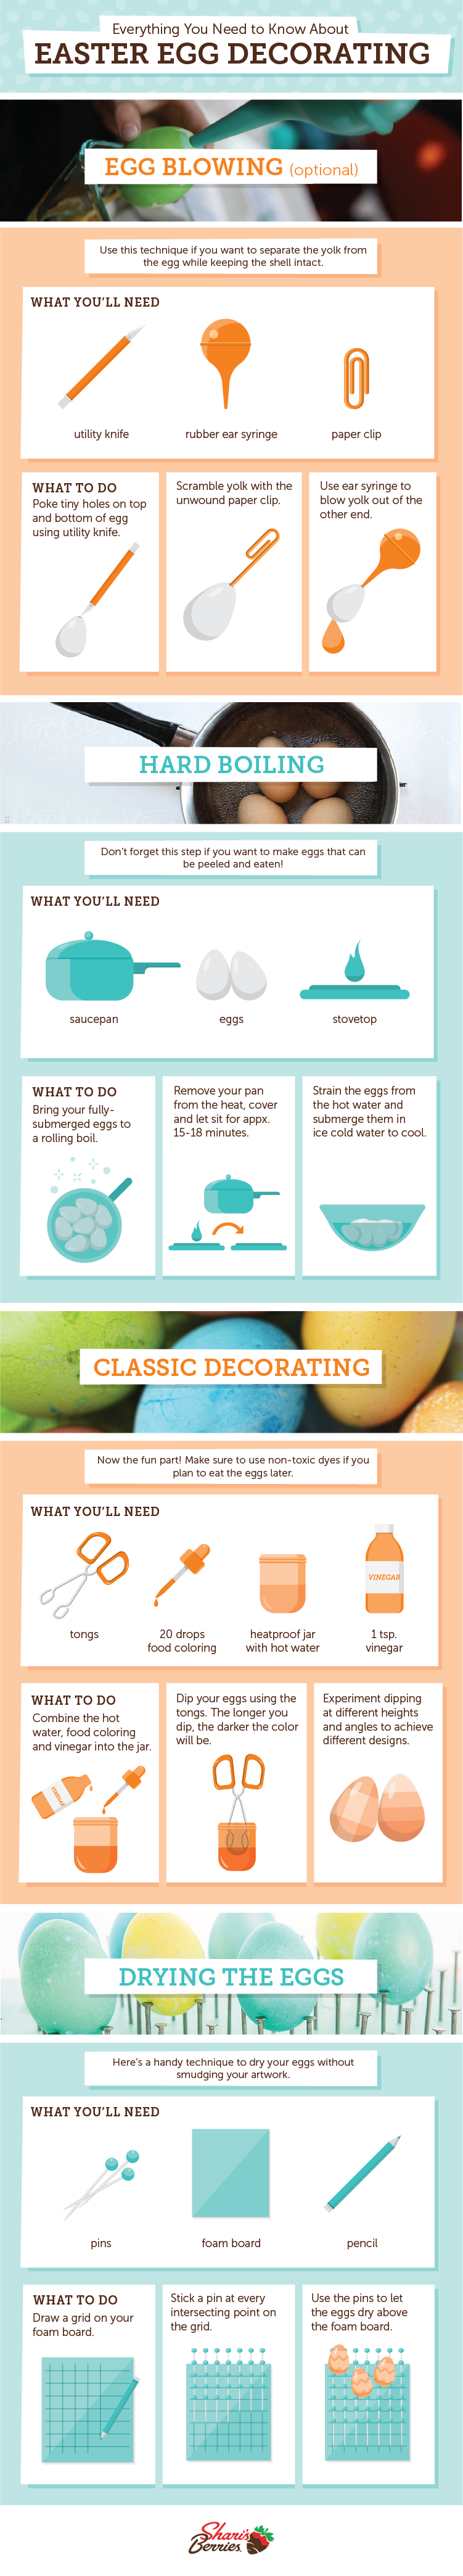 Easter Egg Decorating Guide